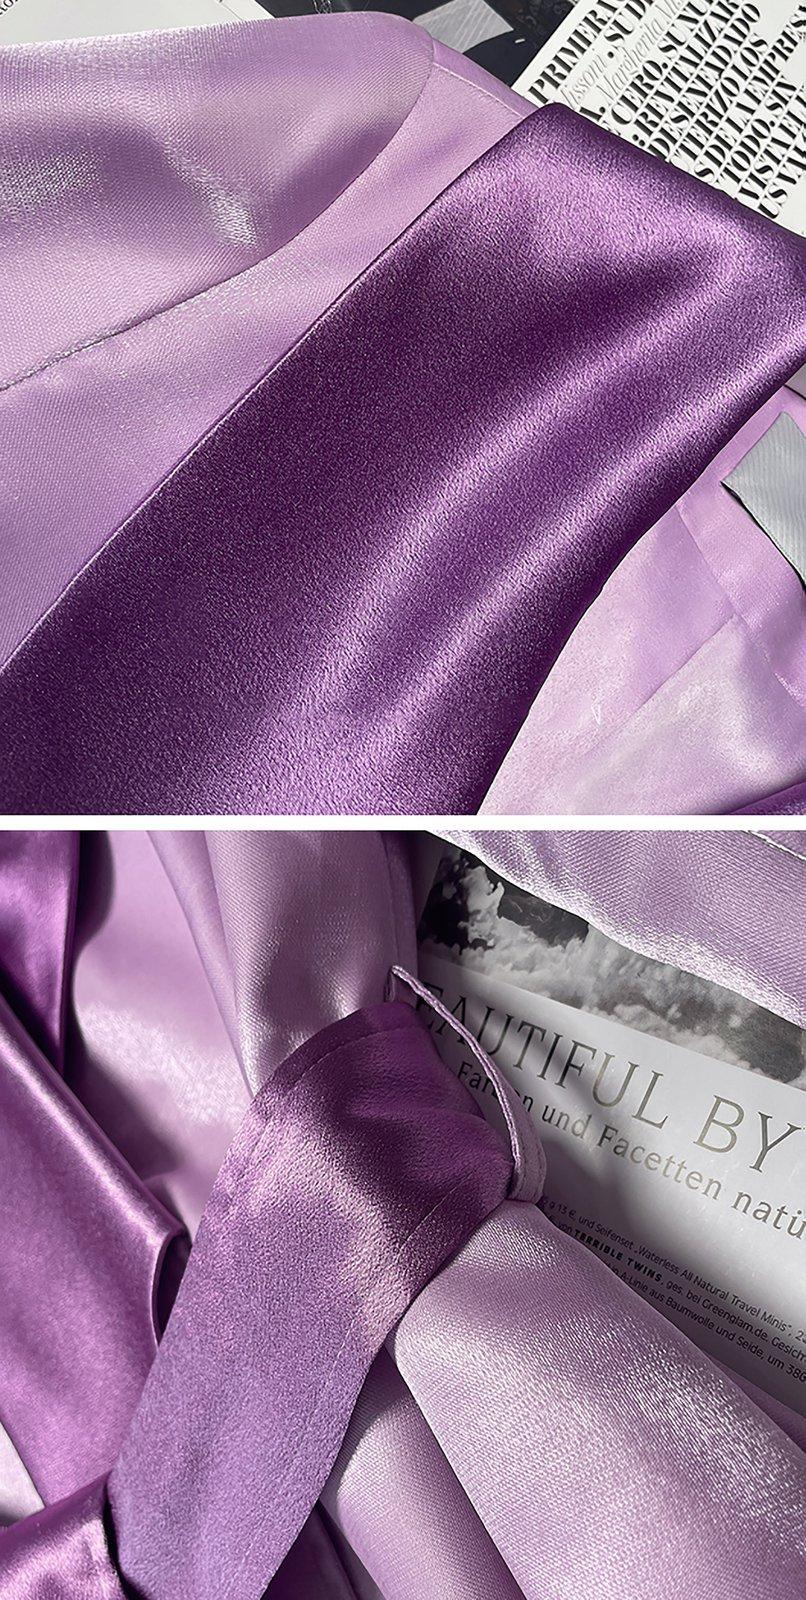 Women Purple Satin Belted Long Gown Trench Coat Vivian Seven